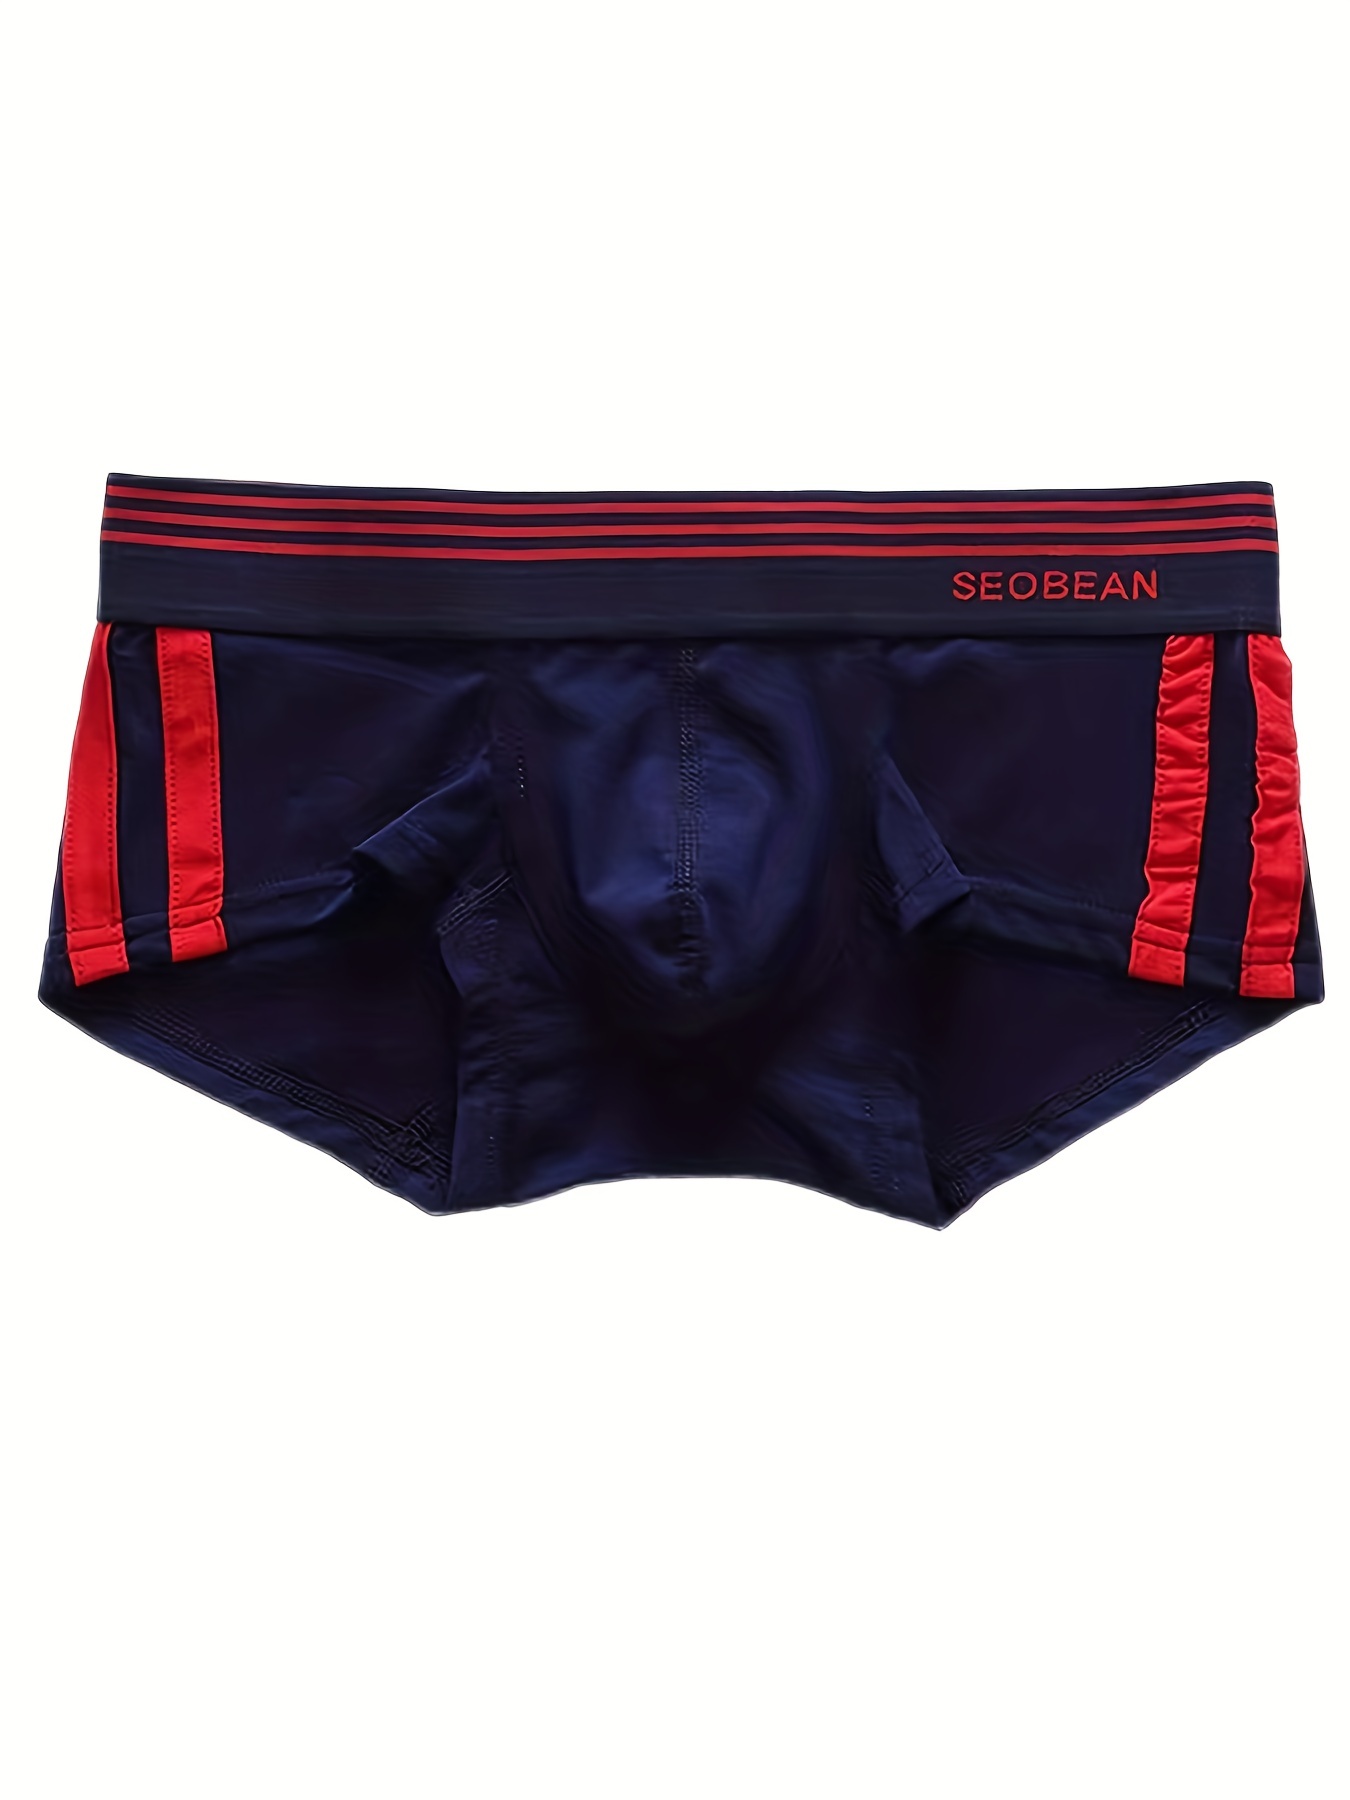 Blue Men's Sexy Boxer Shorts Thong Underwear Pouch Trunks